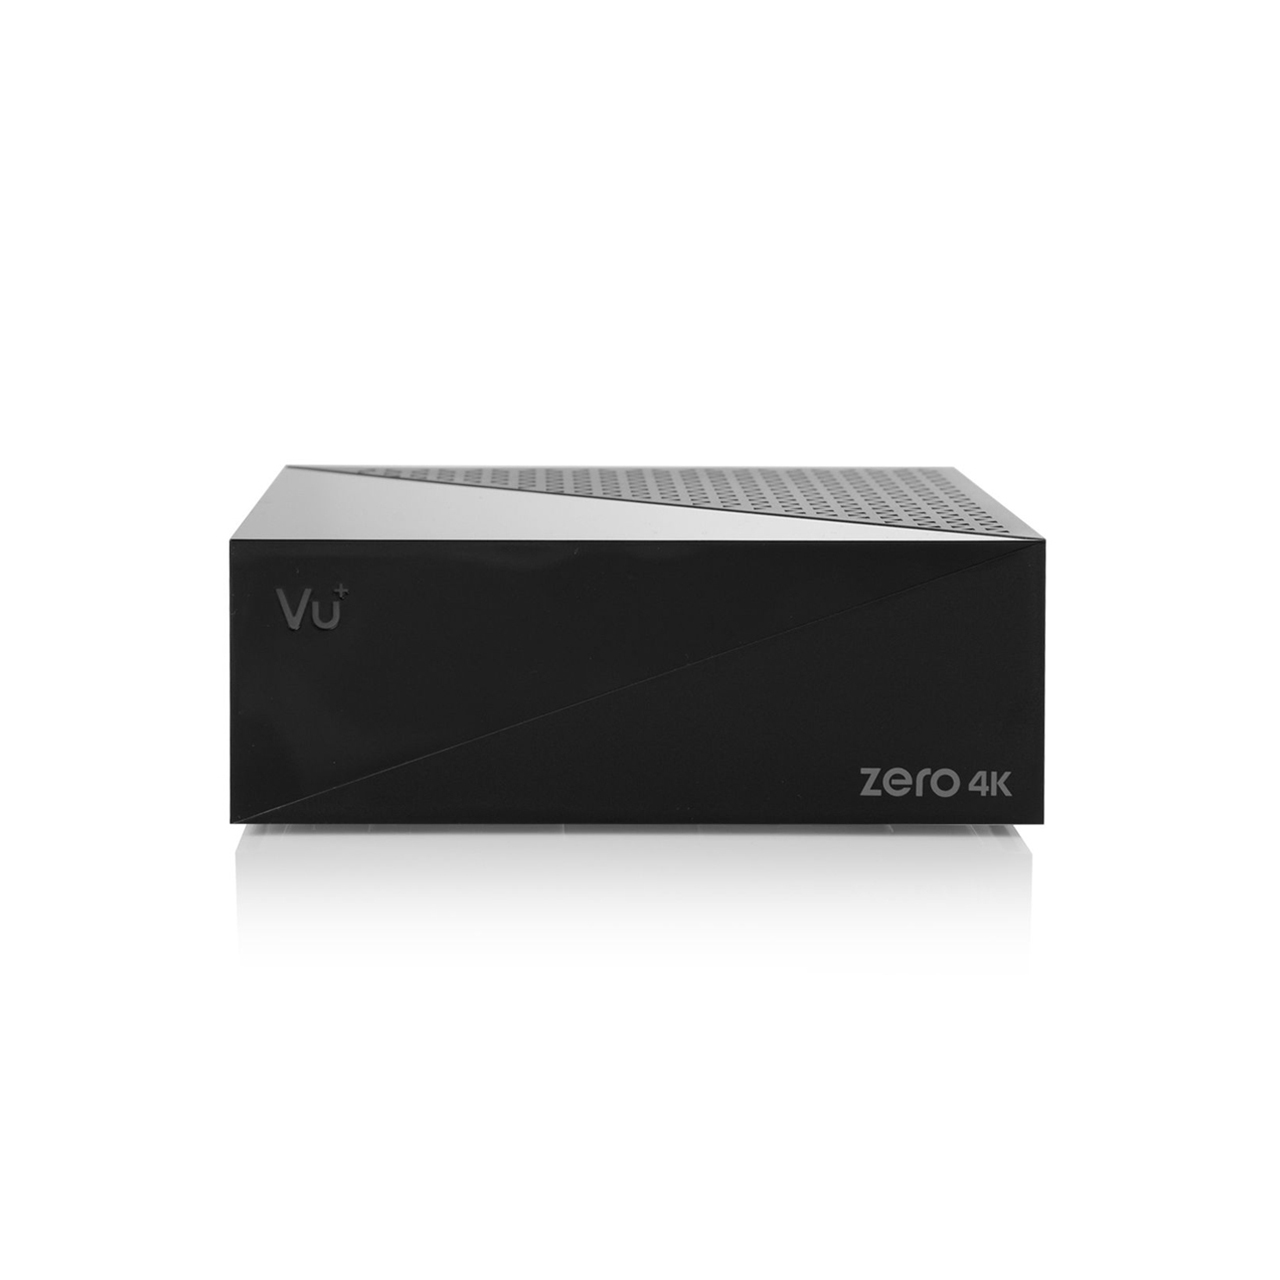 Receiver (Schwarz) Stick DVB-S2 Sat H265 Sat Receiver 4K Wlan UHD Tuner Zero VU+ 1x Linux HD